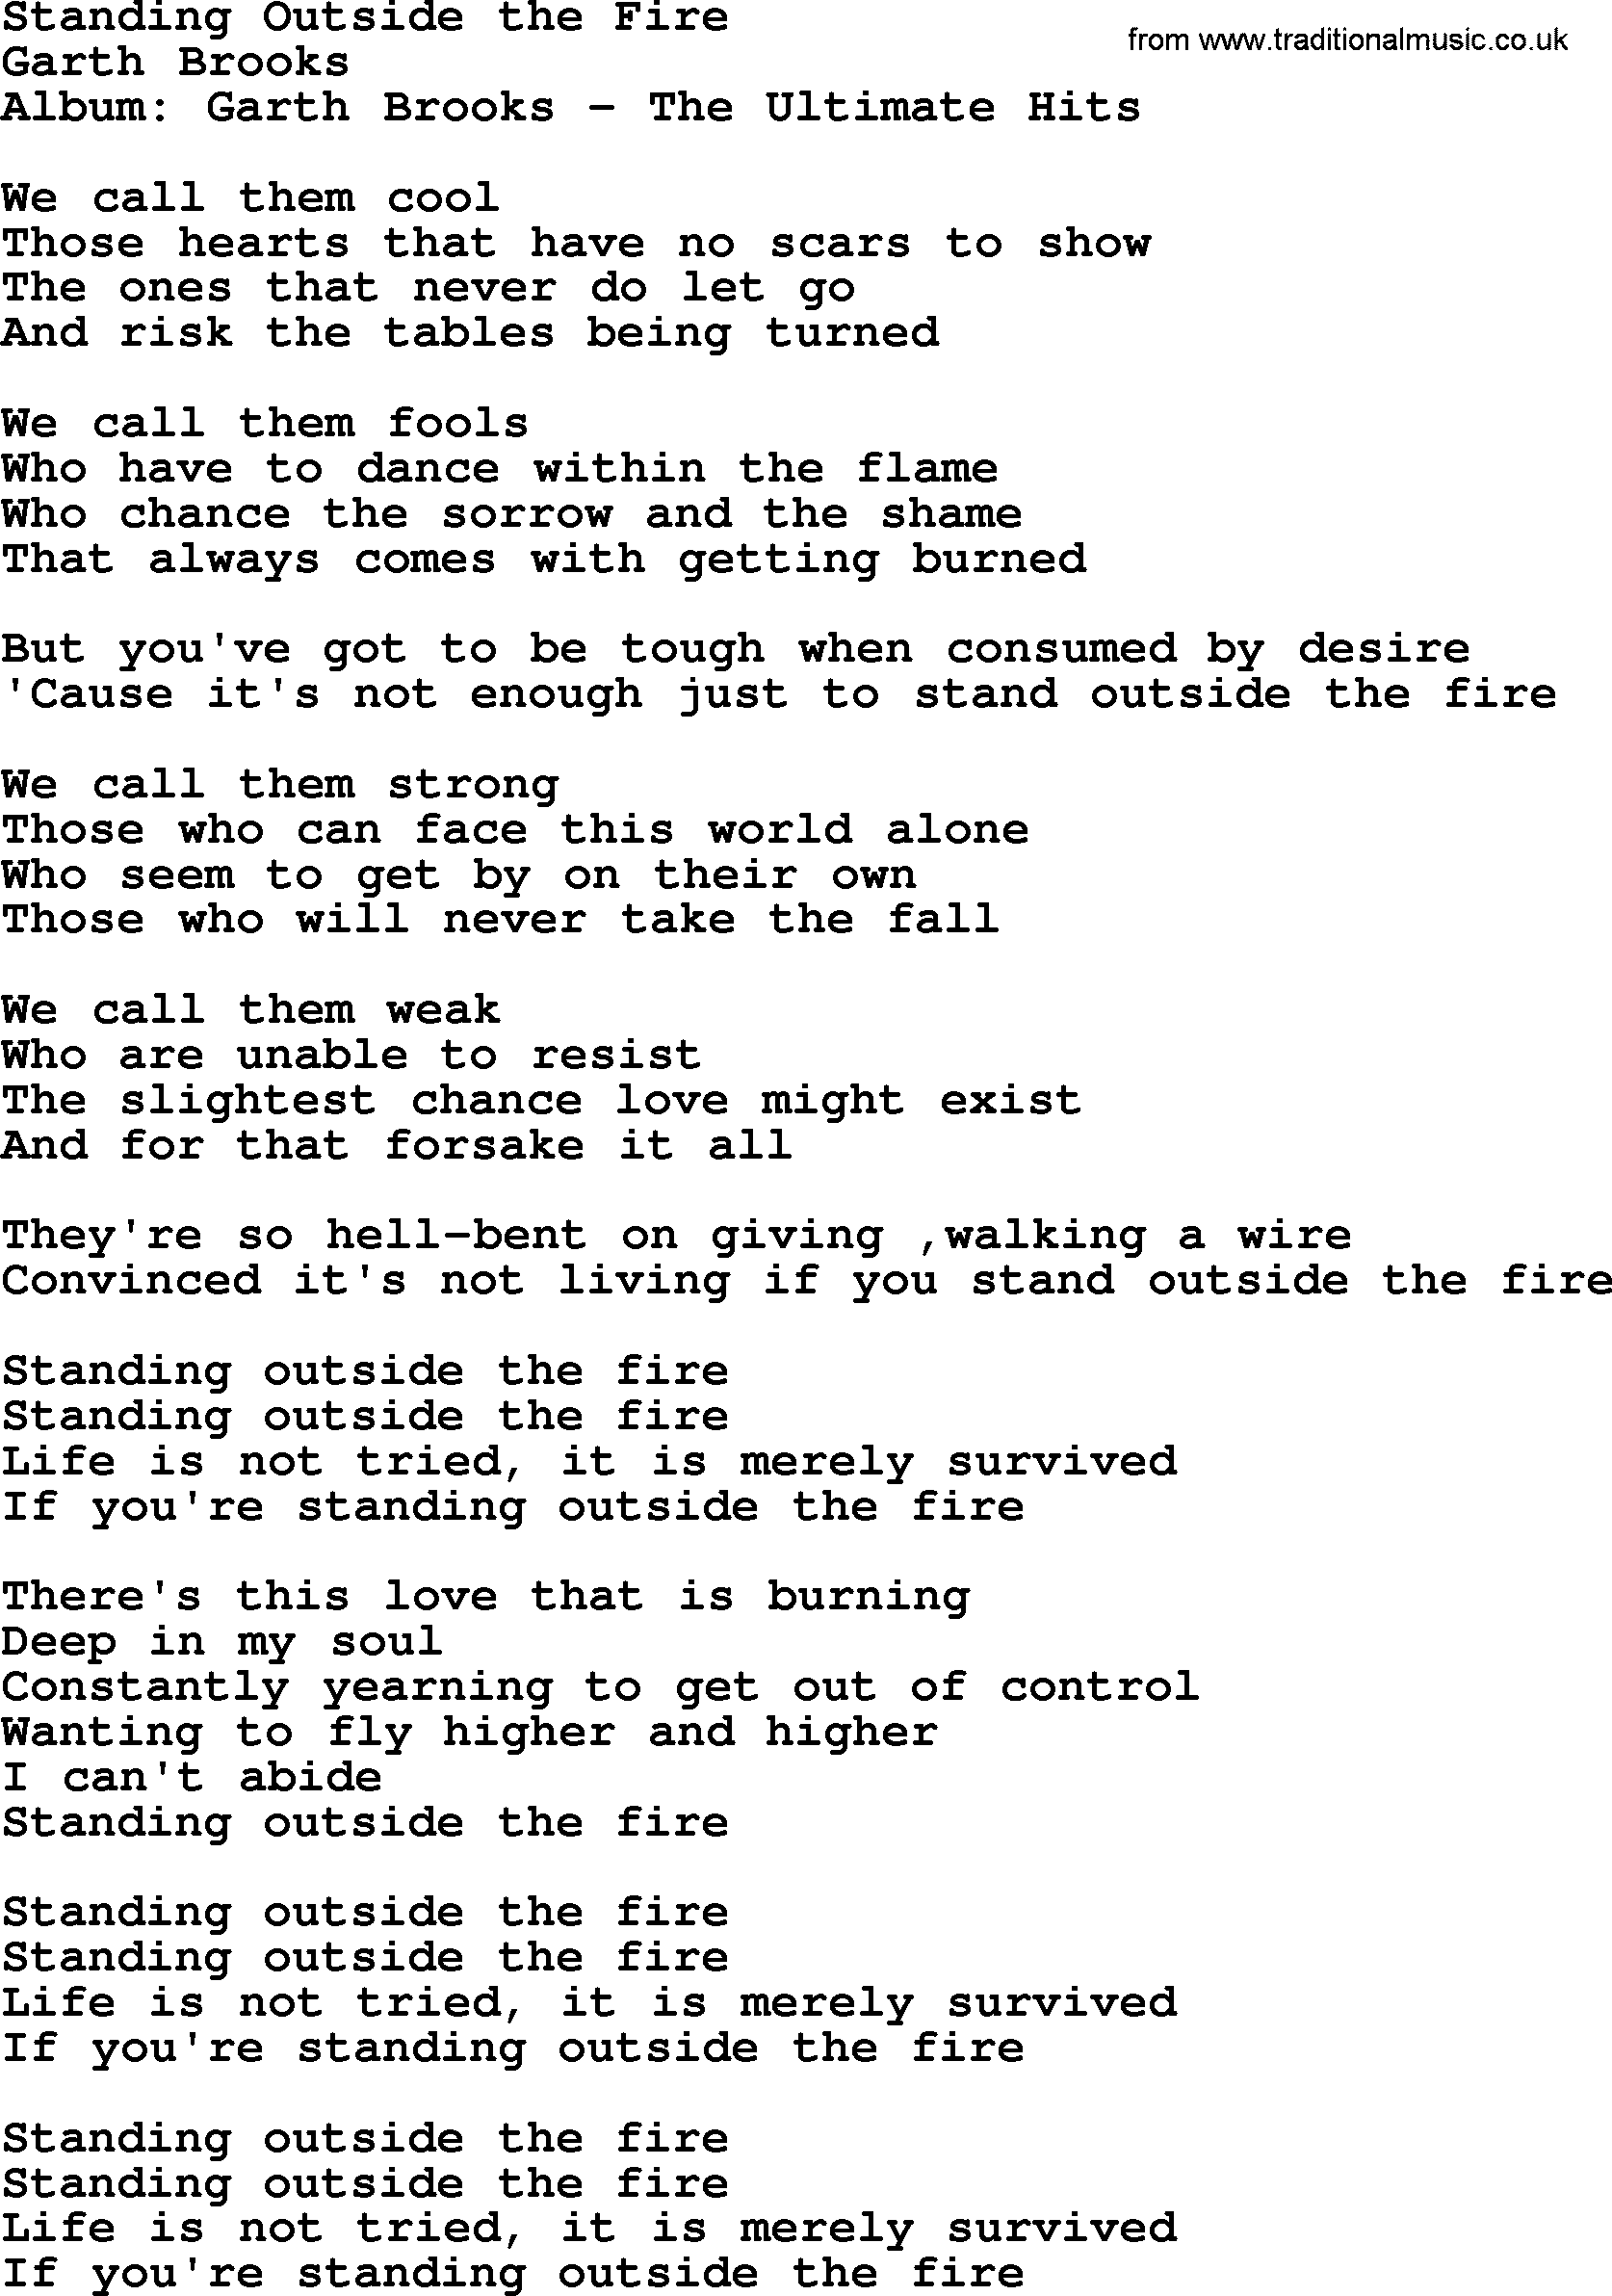 Garth Brooks song: Standing Outside The Fire, lyrics